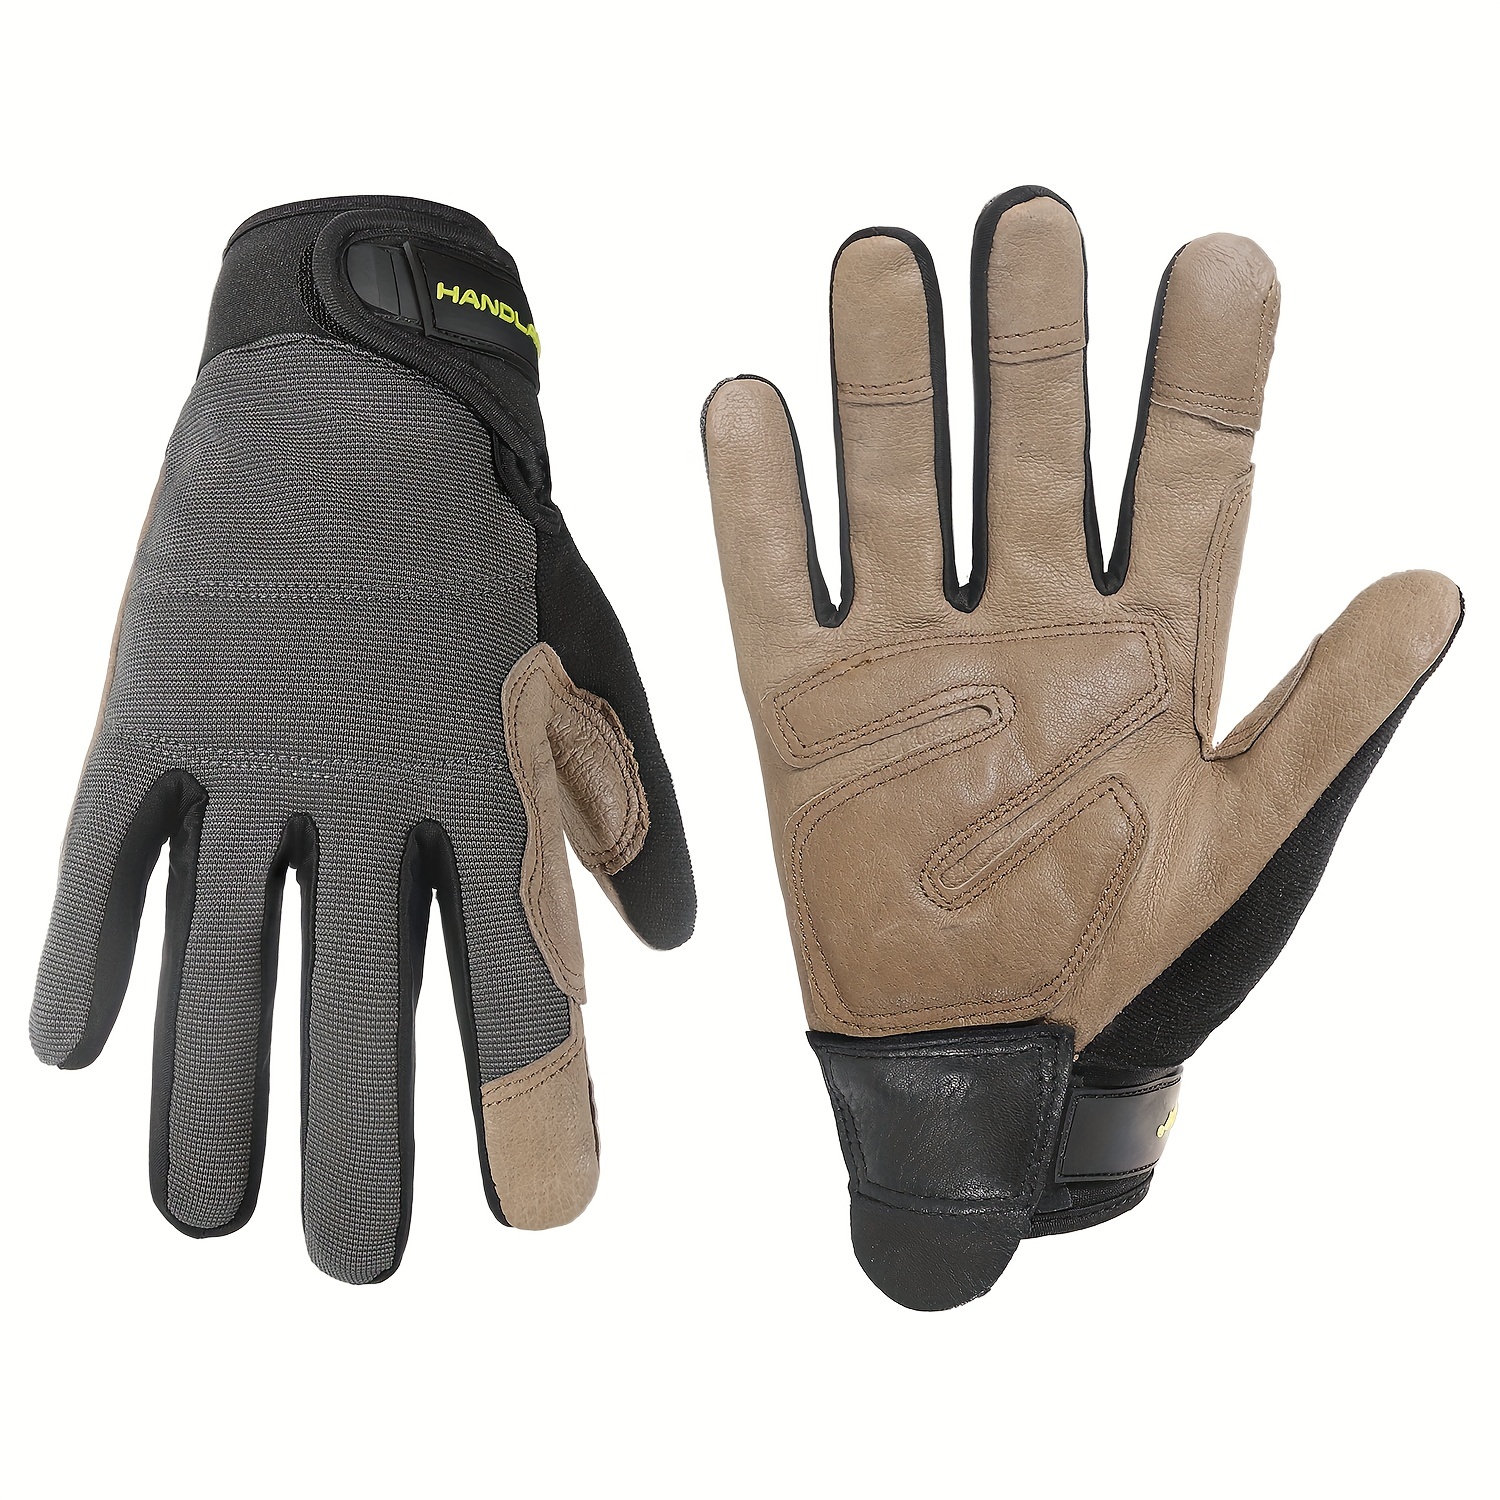 Leather Work Gloves for Men Women Safety Work Gloves Mechanic